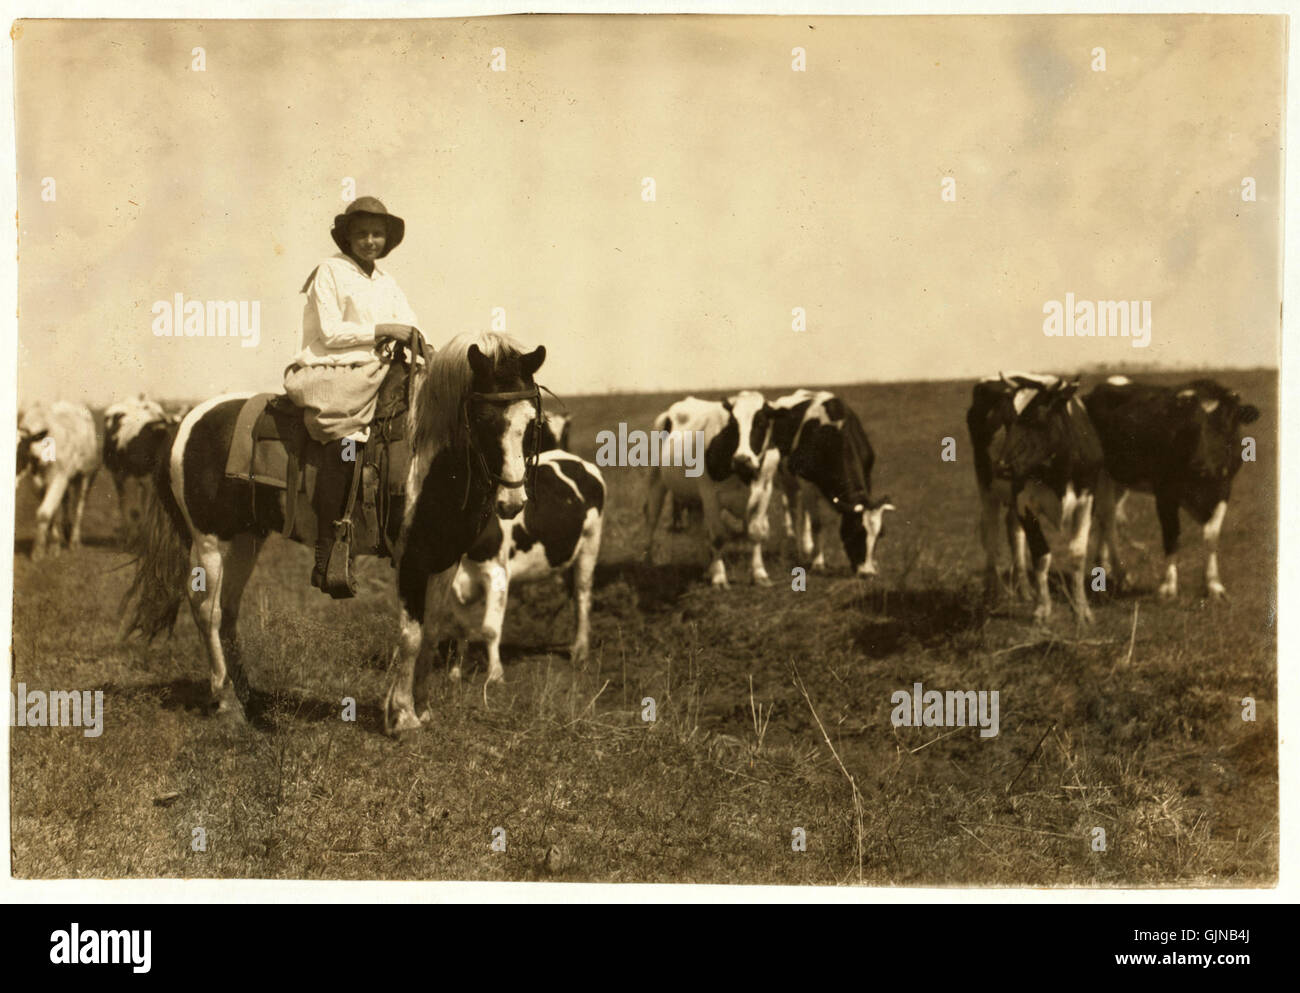 Lewis Hine, Sarah miscelatore (crutcher), 12 anni bovini herder, Lawton, Oklahoma, 1917 Foto Stock